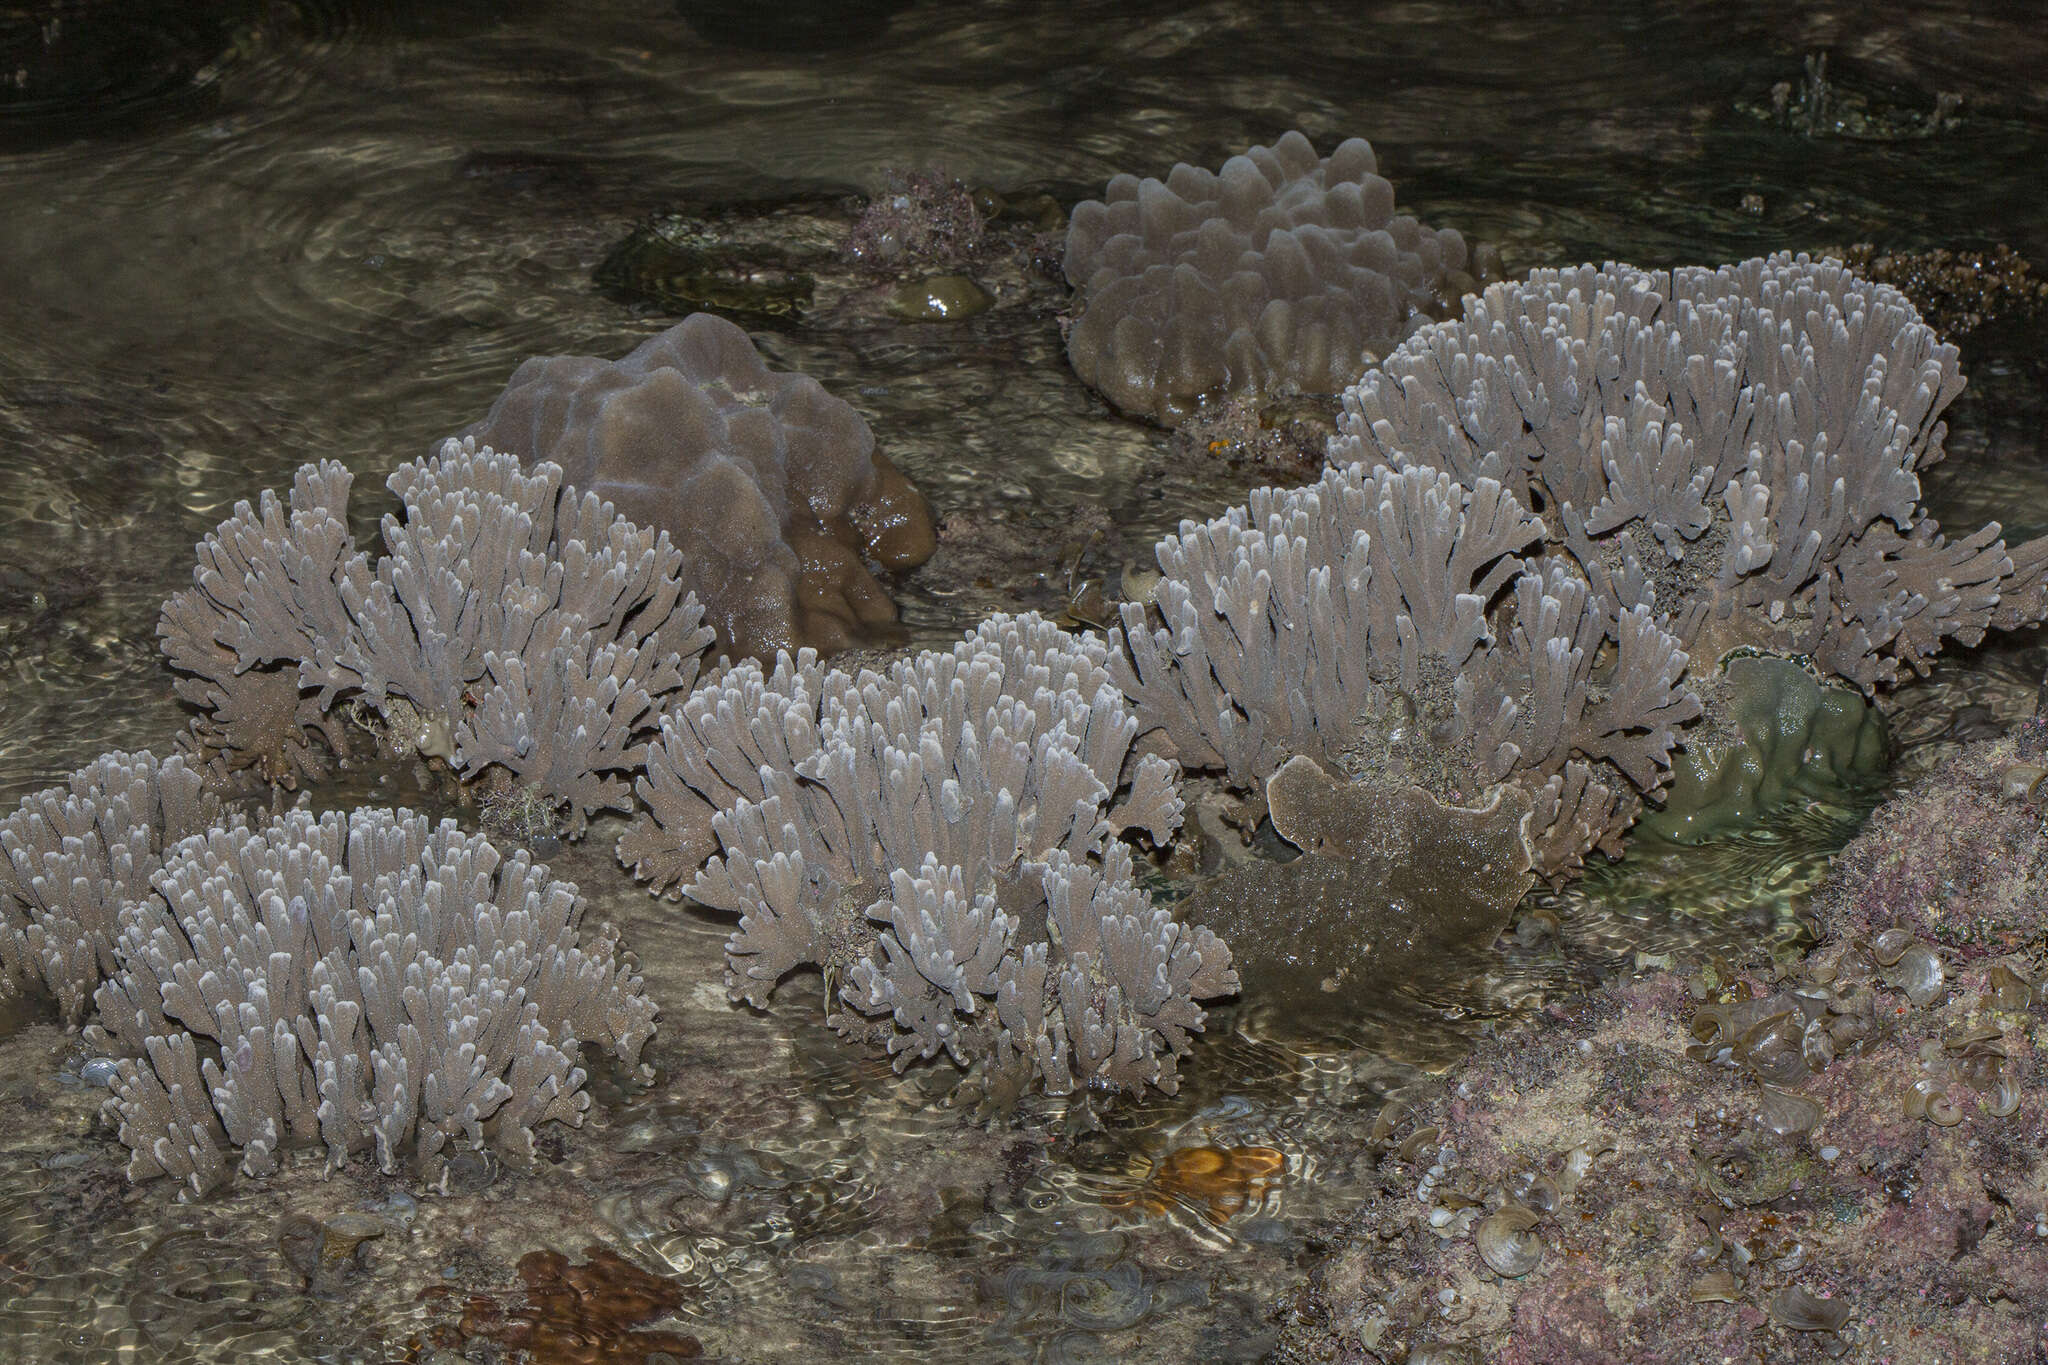 Image of pore coral